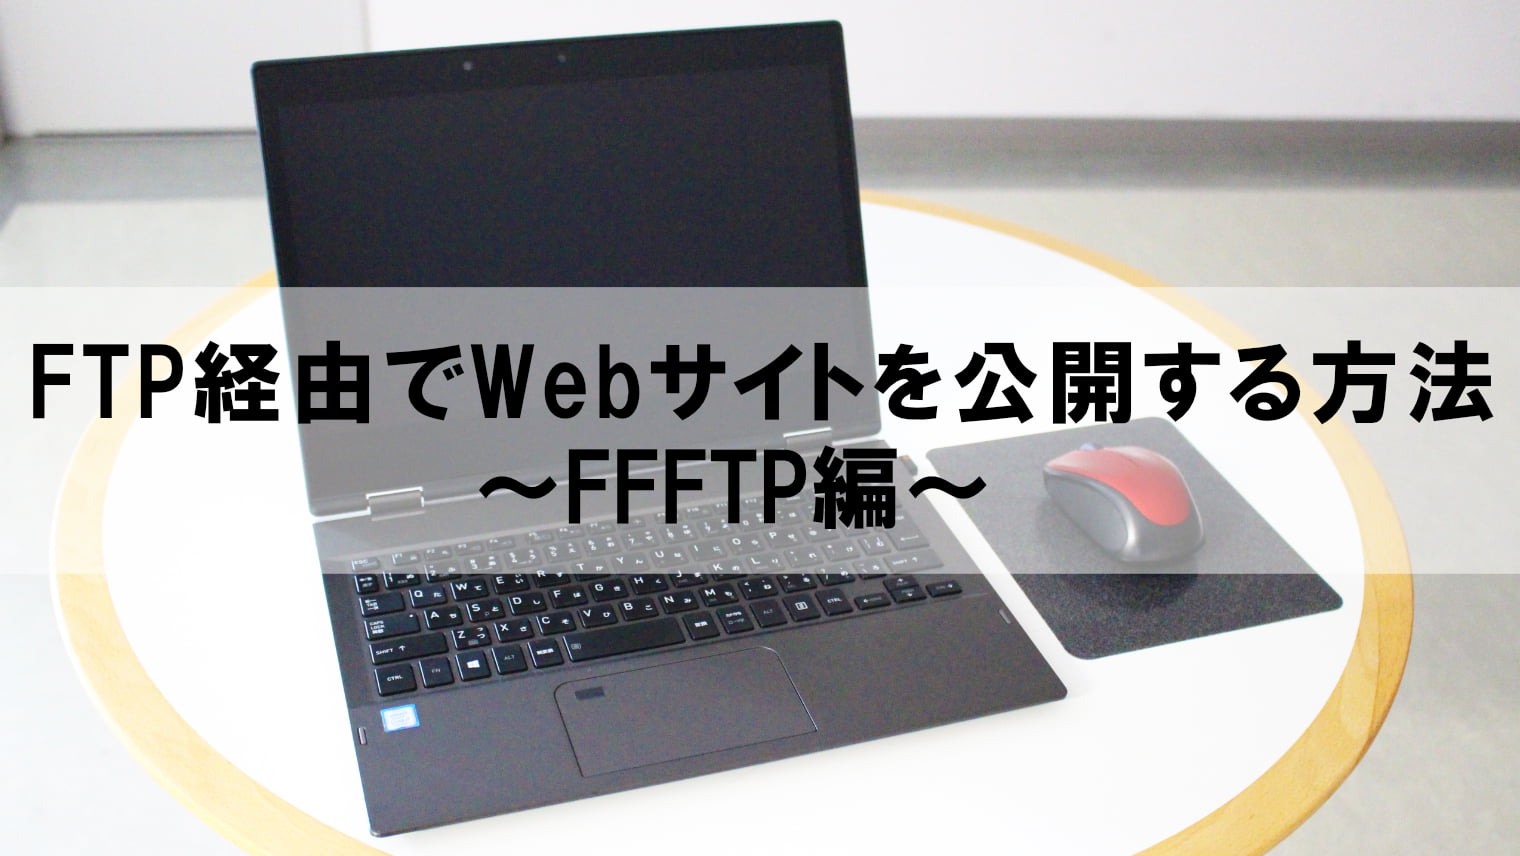 FTP経由でWebサイトを公開する方法【FFFTP編】